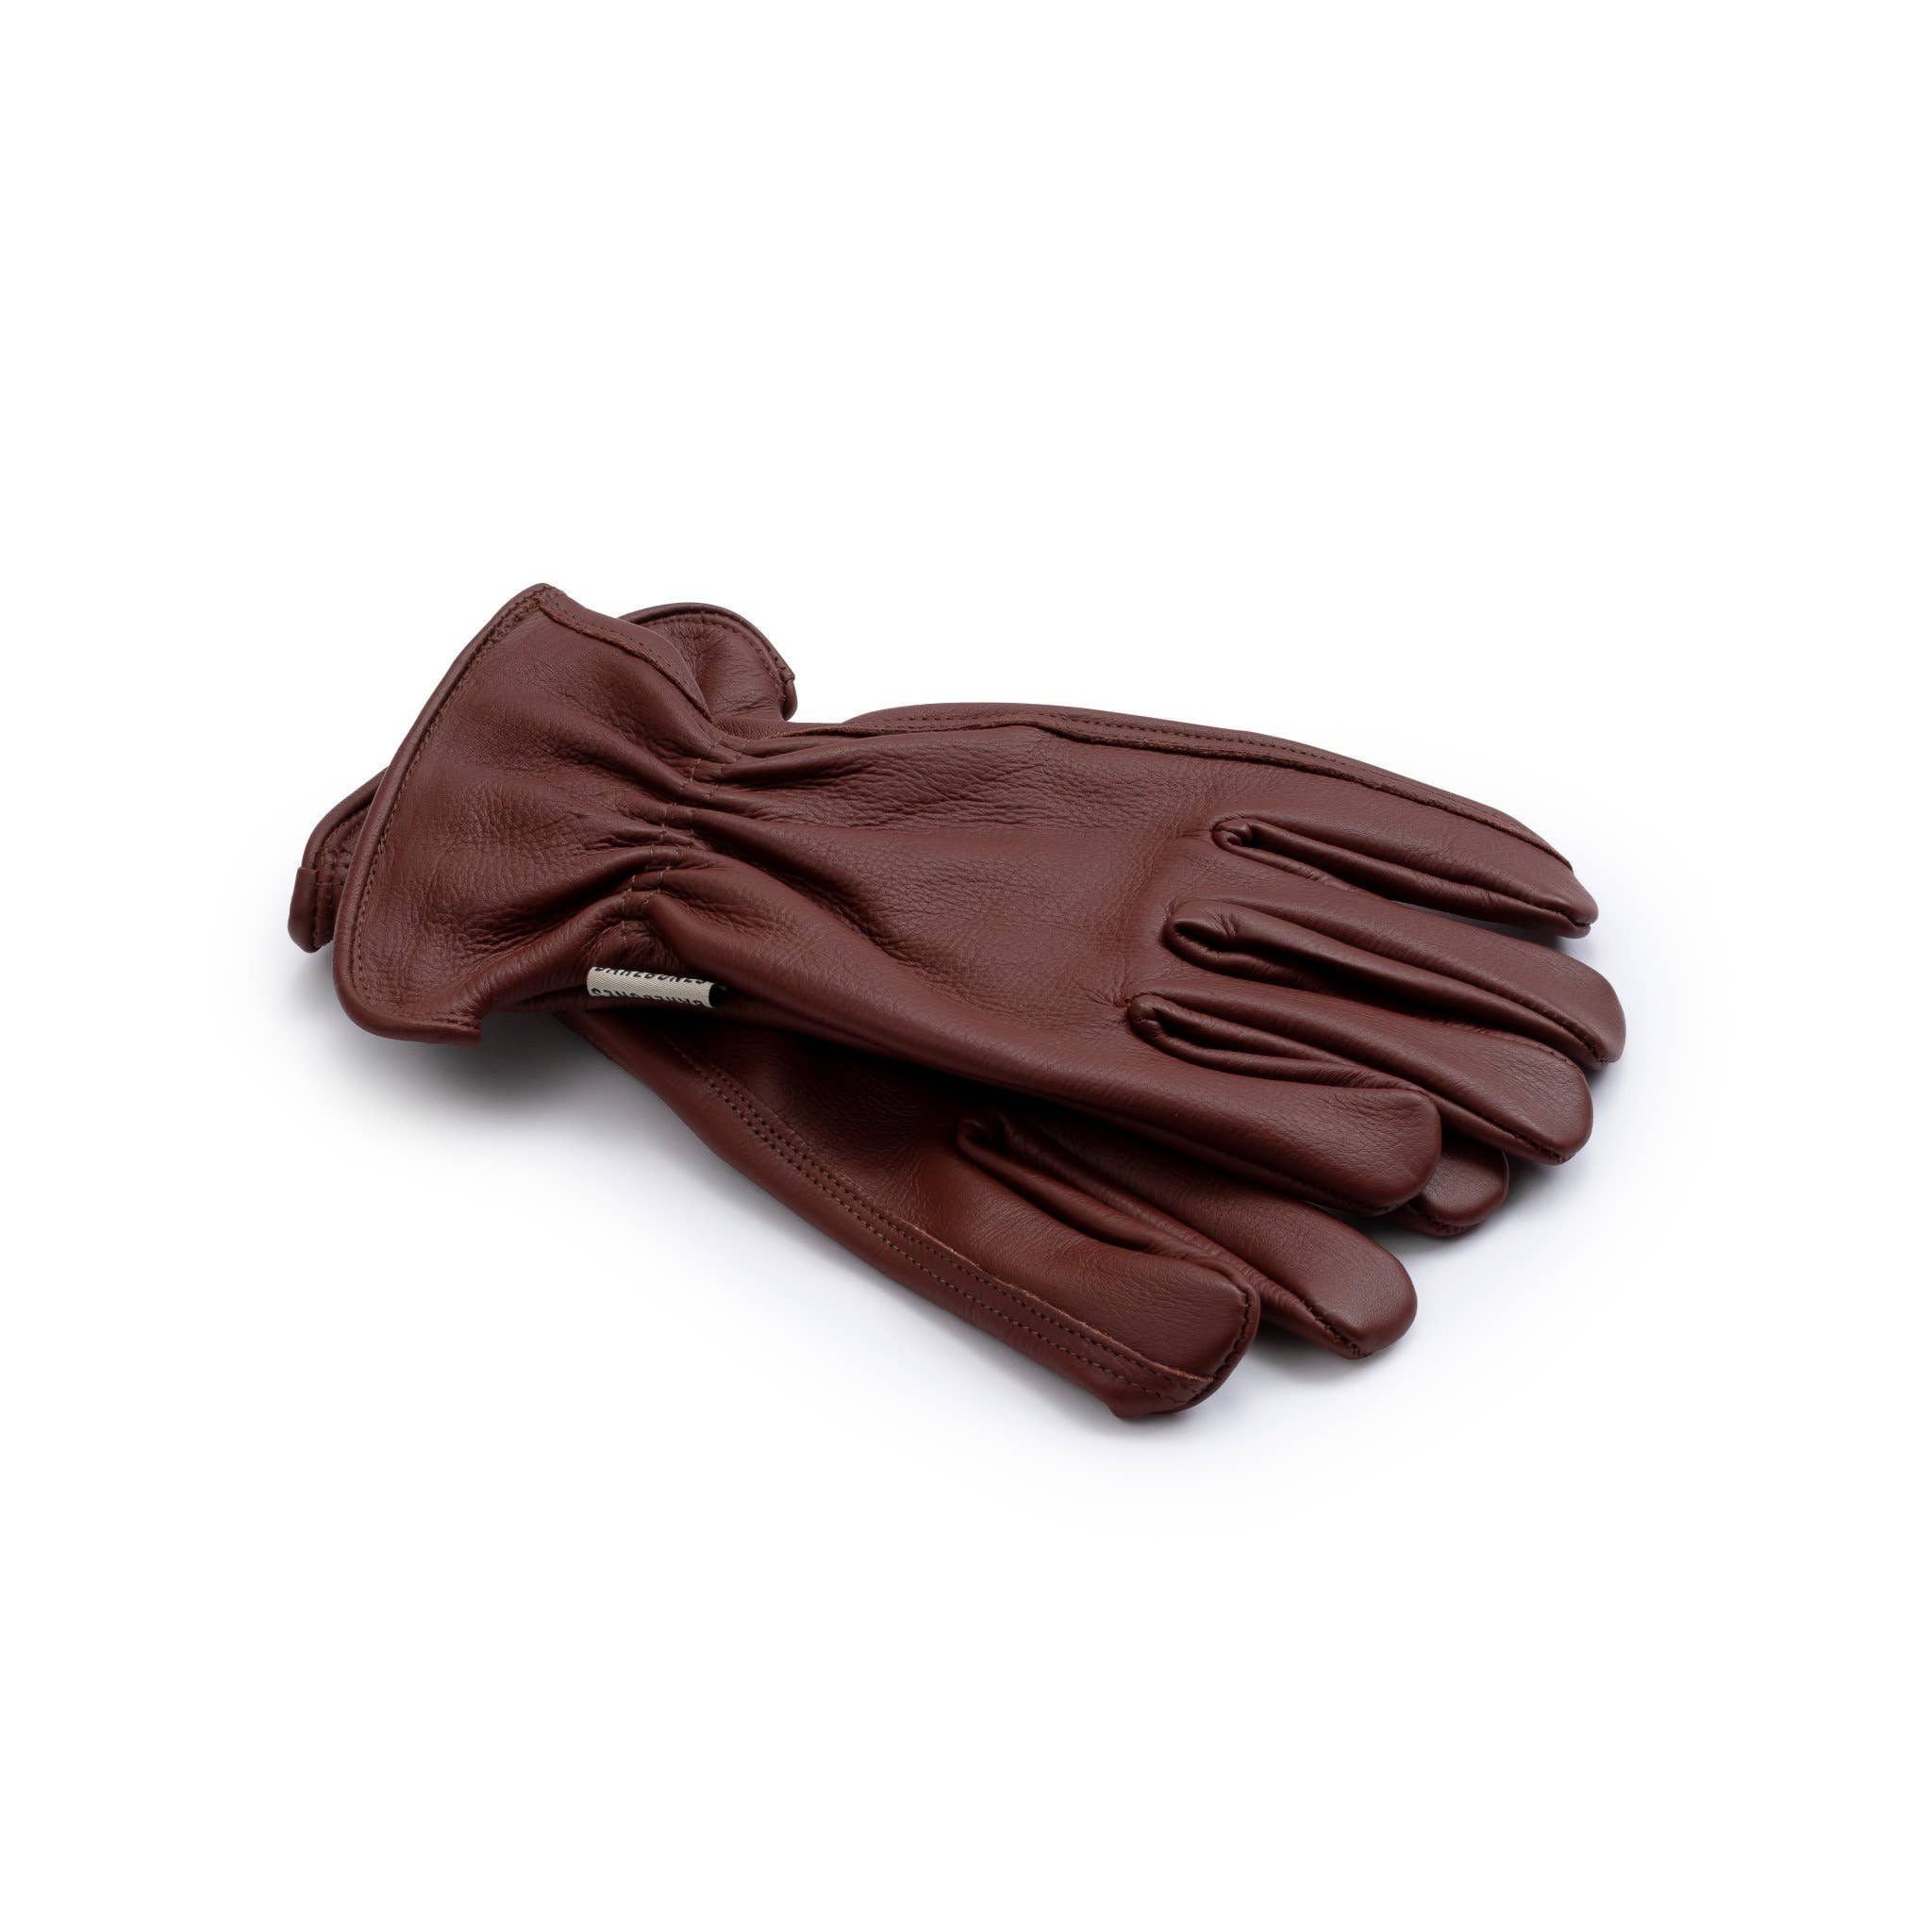 Barebones | Classic Work Glove, Garden, Barebones, Defiance Outdoor Gear Co.